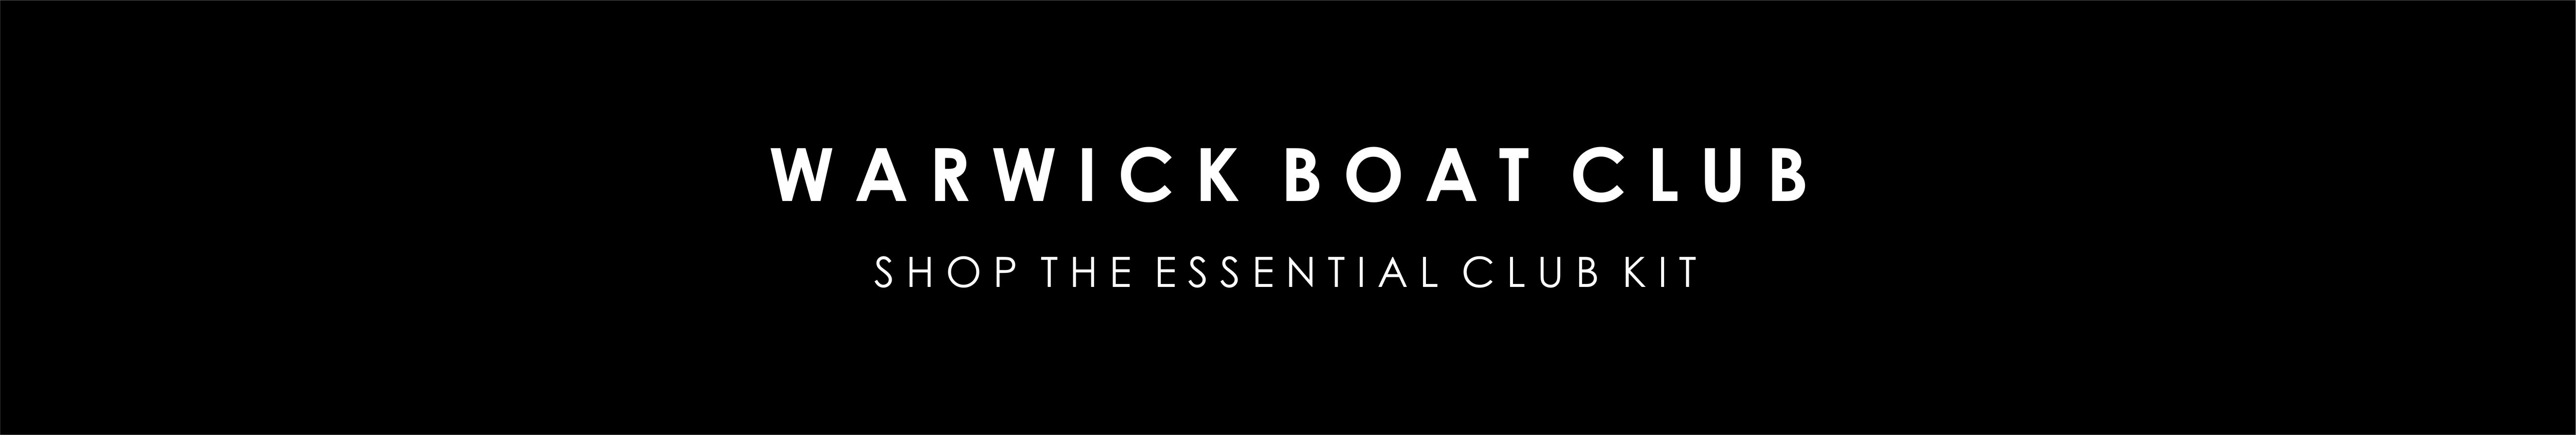 warwick-boat-club-banner.jpg